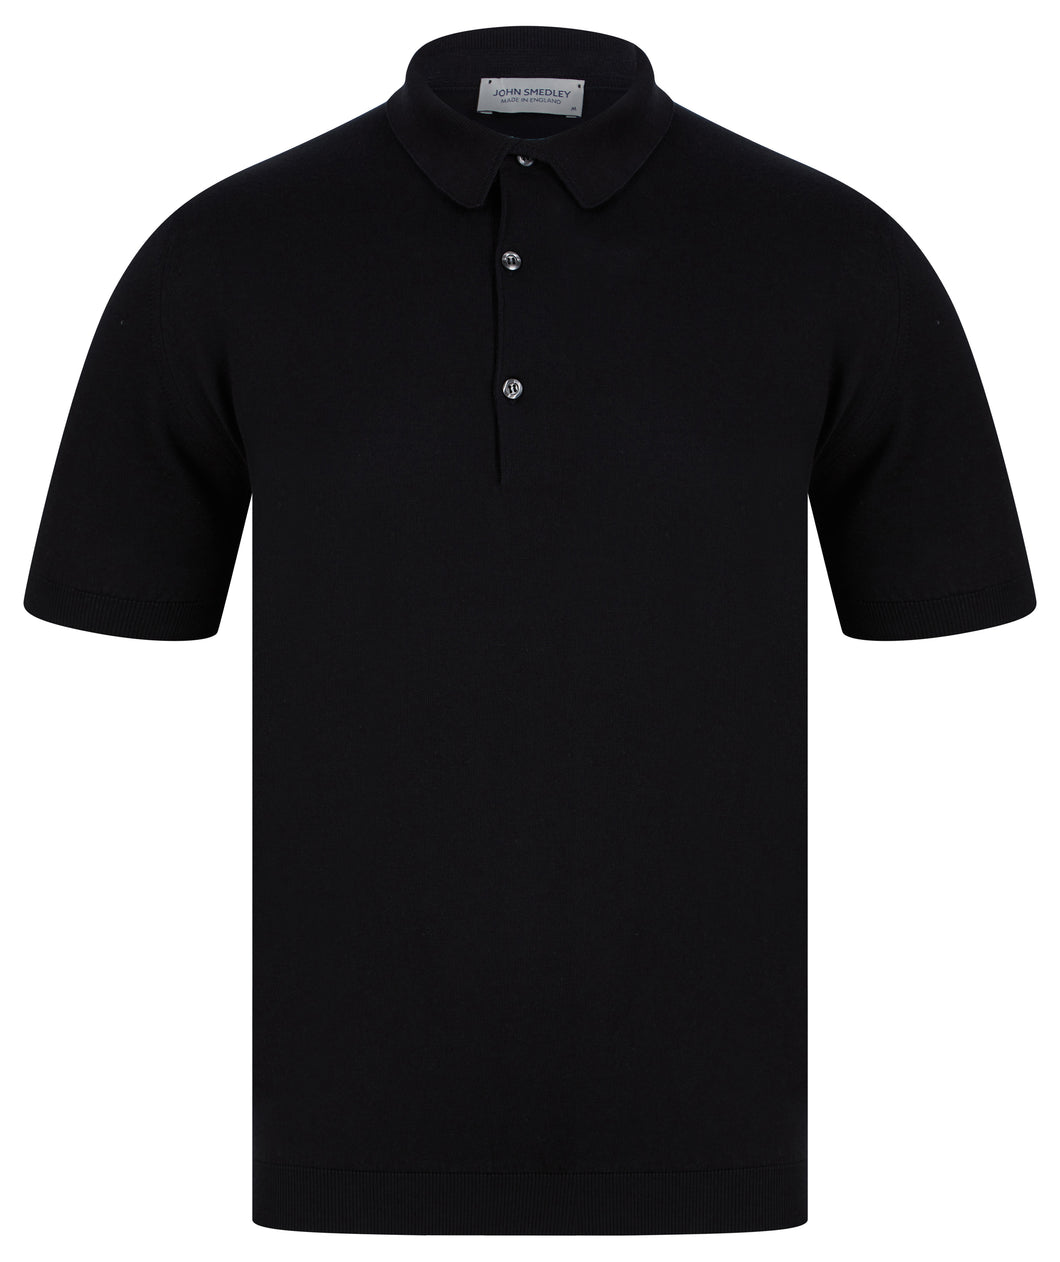 John Smedley Adrian Polo Shirt Black